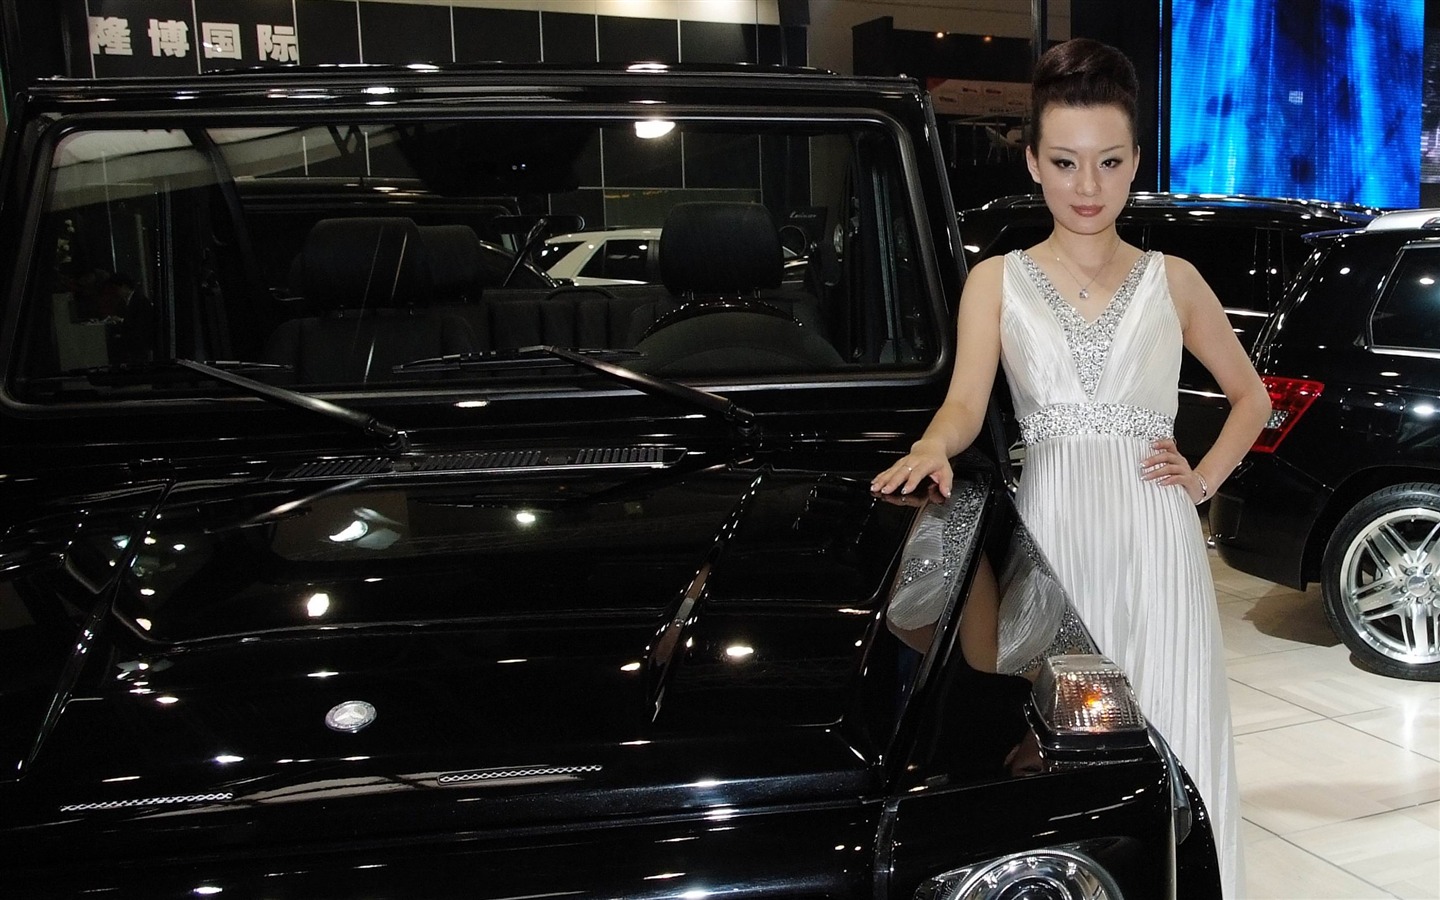 2010 Salón Internacional del Automóvil de Beijing Heung Che belleza (obras barras de refuerzo) #7 - 1440x900